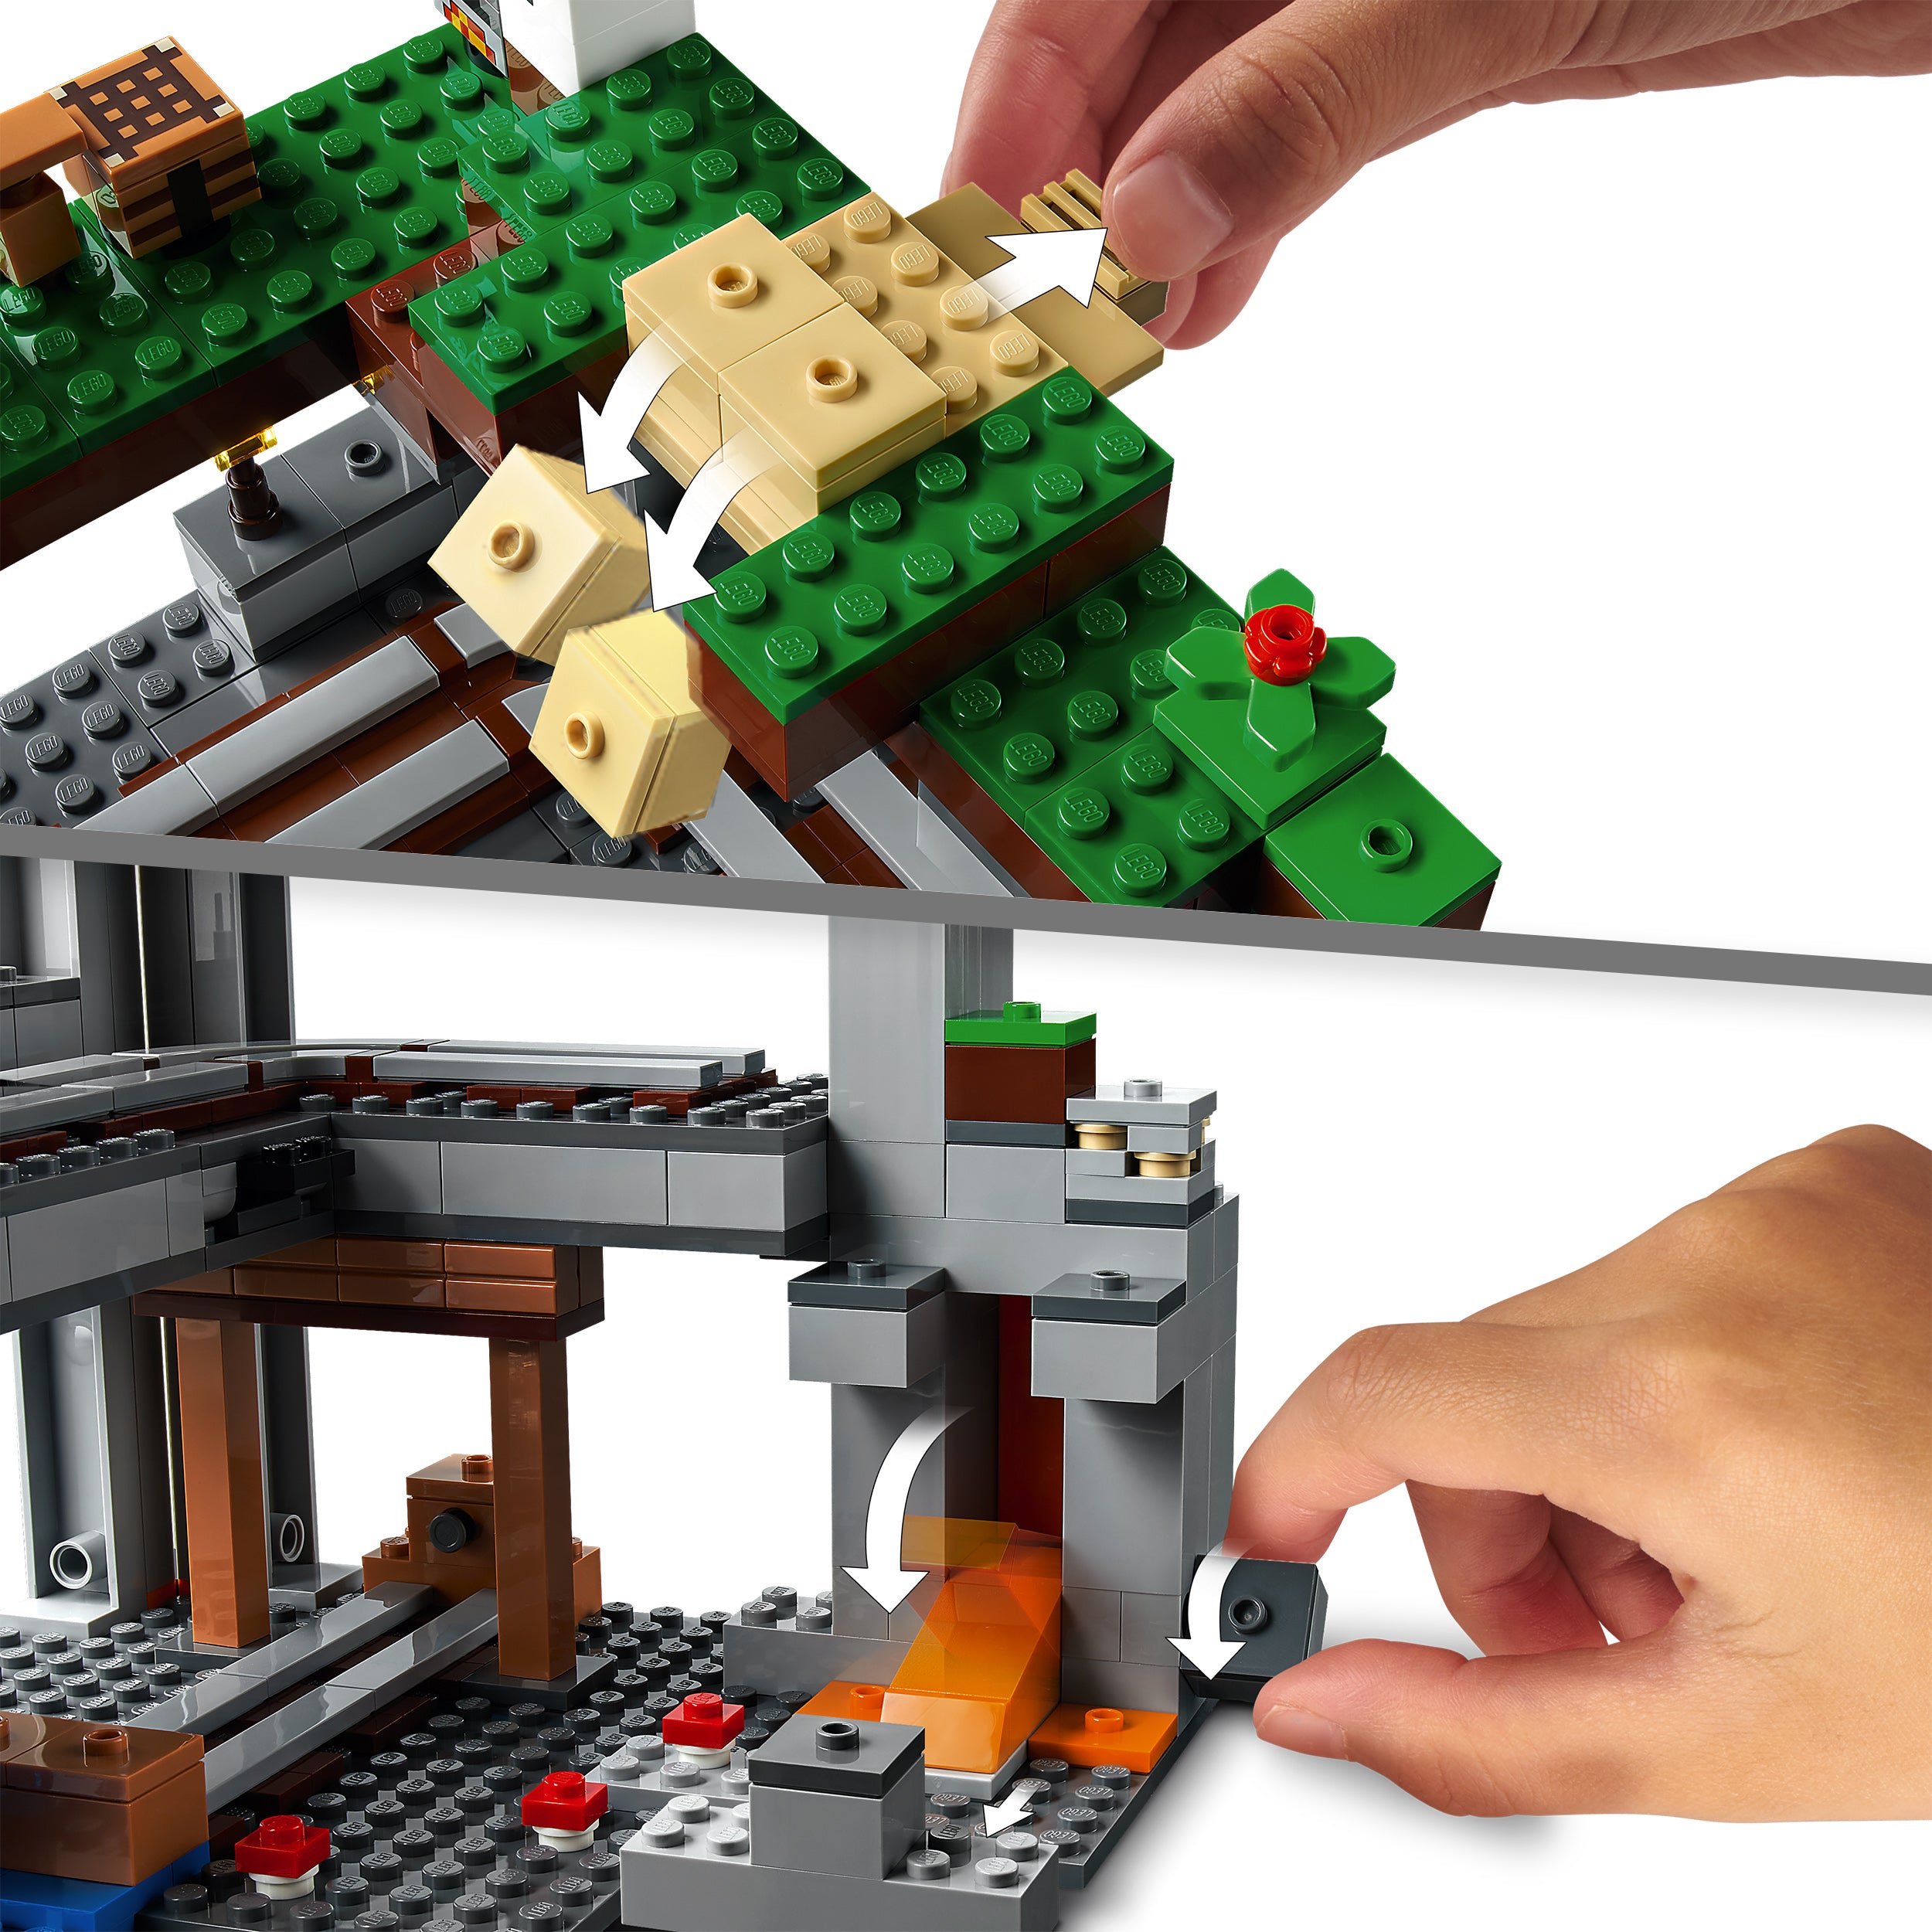 LEGO® Minecraft The First Adventure Set 21169 Default Title